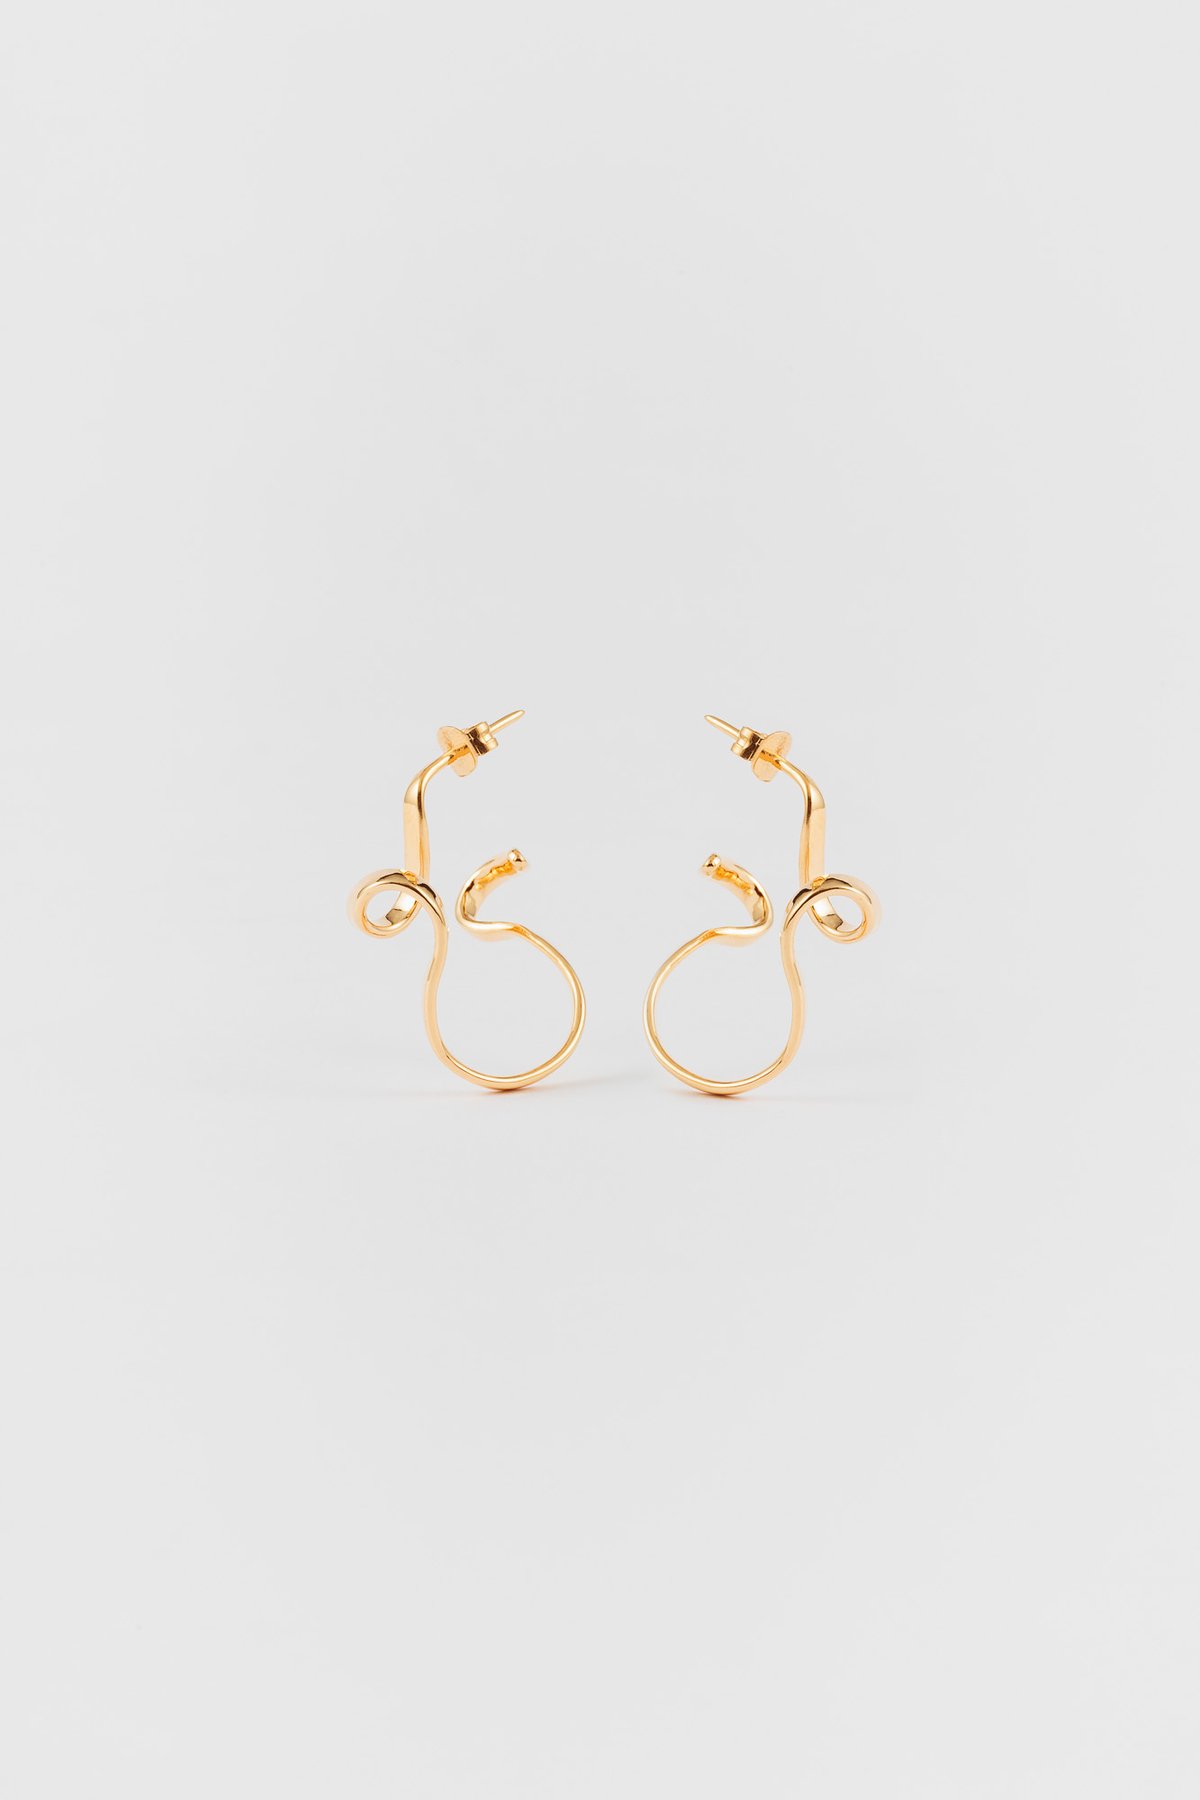 Image of ampersand earrings